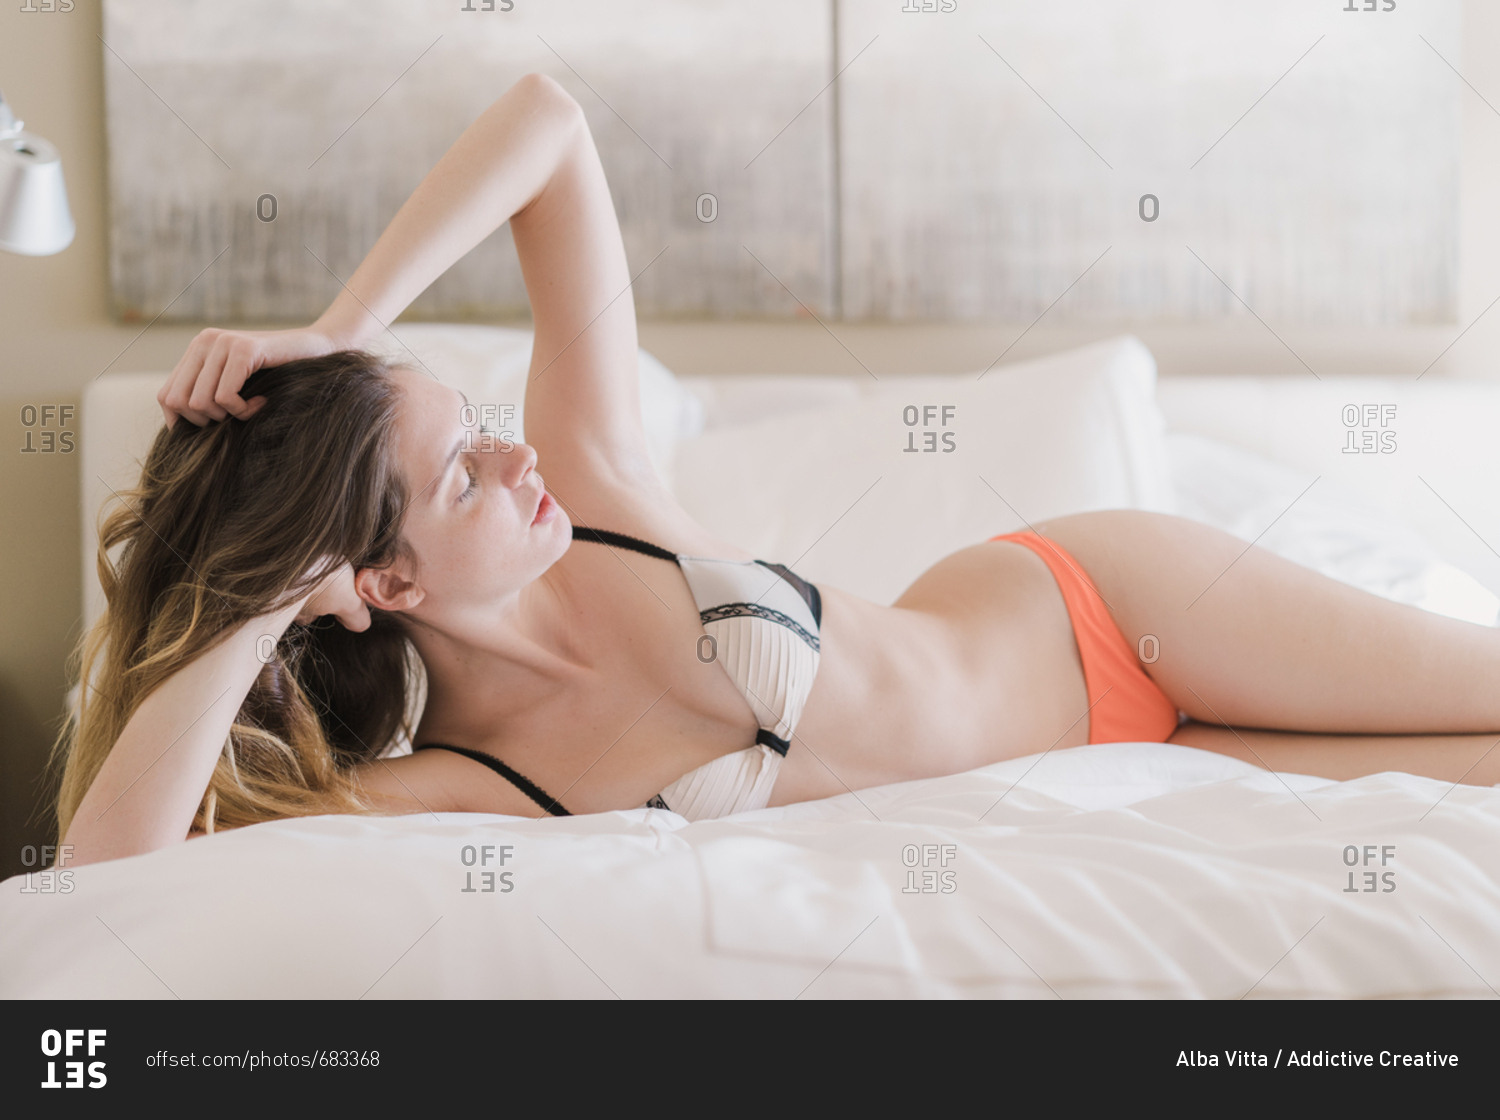 woman lingerie posing stock photos - OFFSET